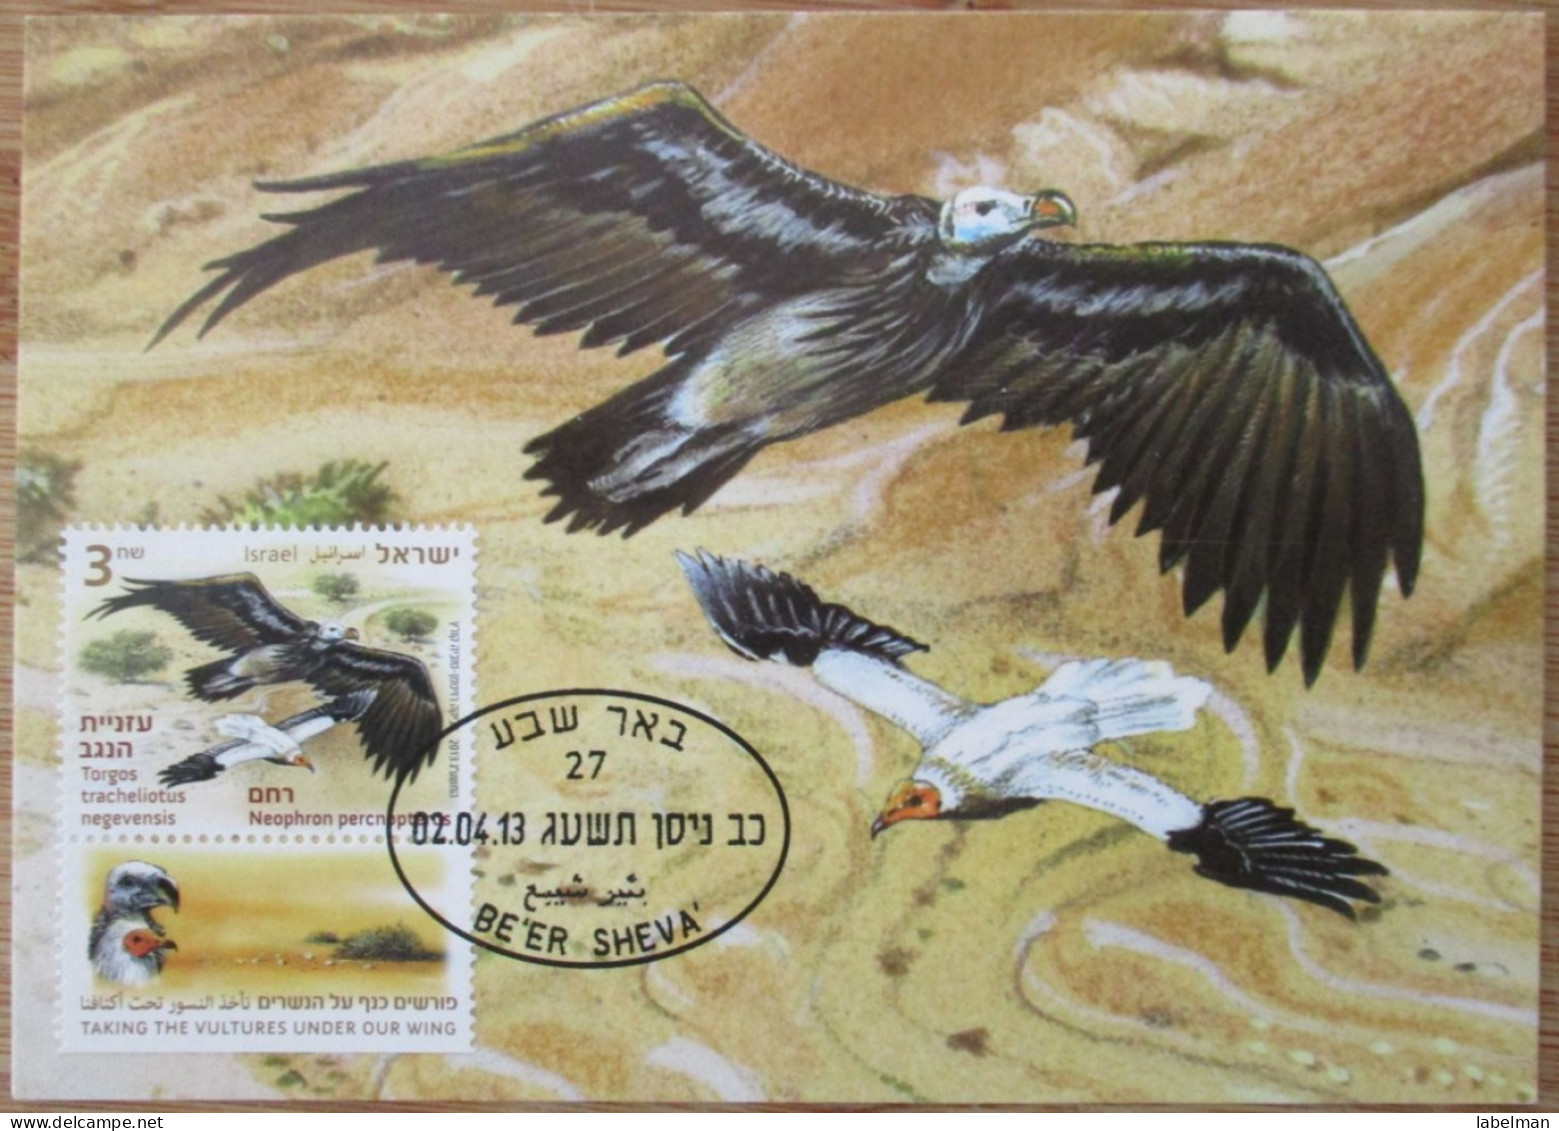 ISRAEL 2013 VULTURE GYPAETUS BARBATUS PALPHOT MAXIMUM CARD STAMP FIRST DAY OF ISSUE POSTCARD CARTE POSTALE POSTKARTE - Cartes-maximum